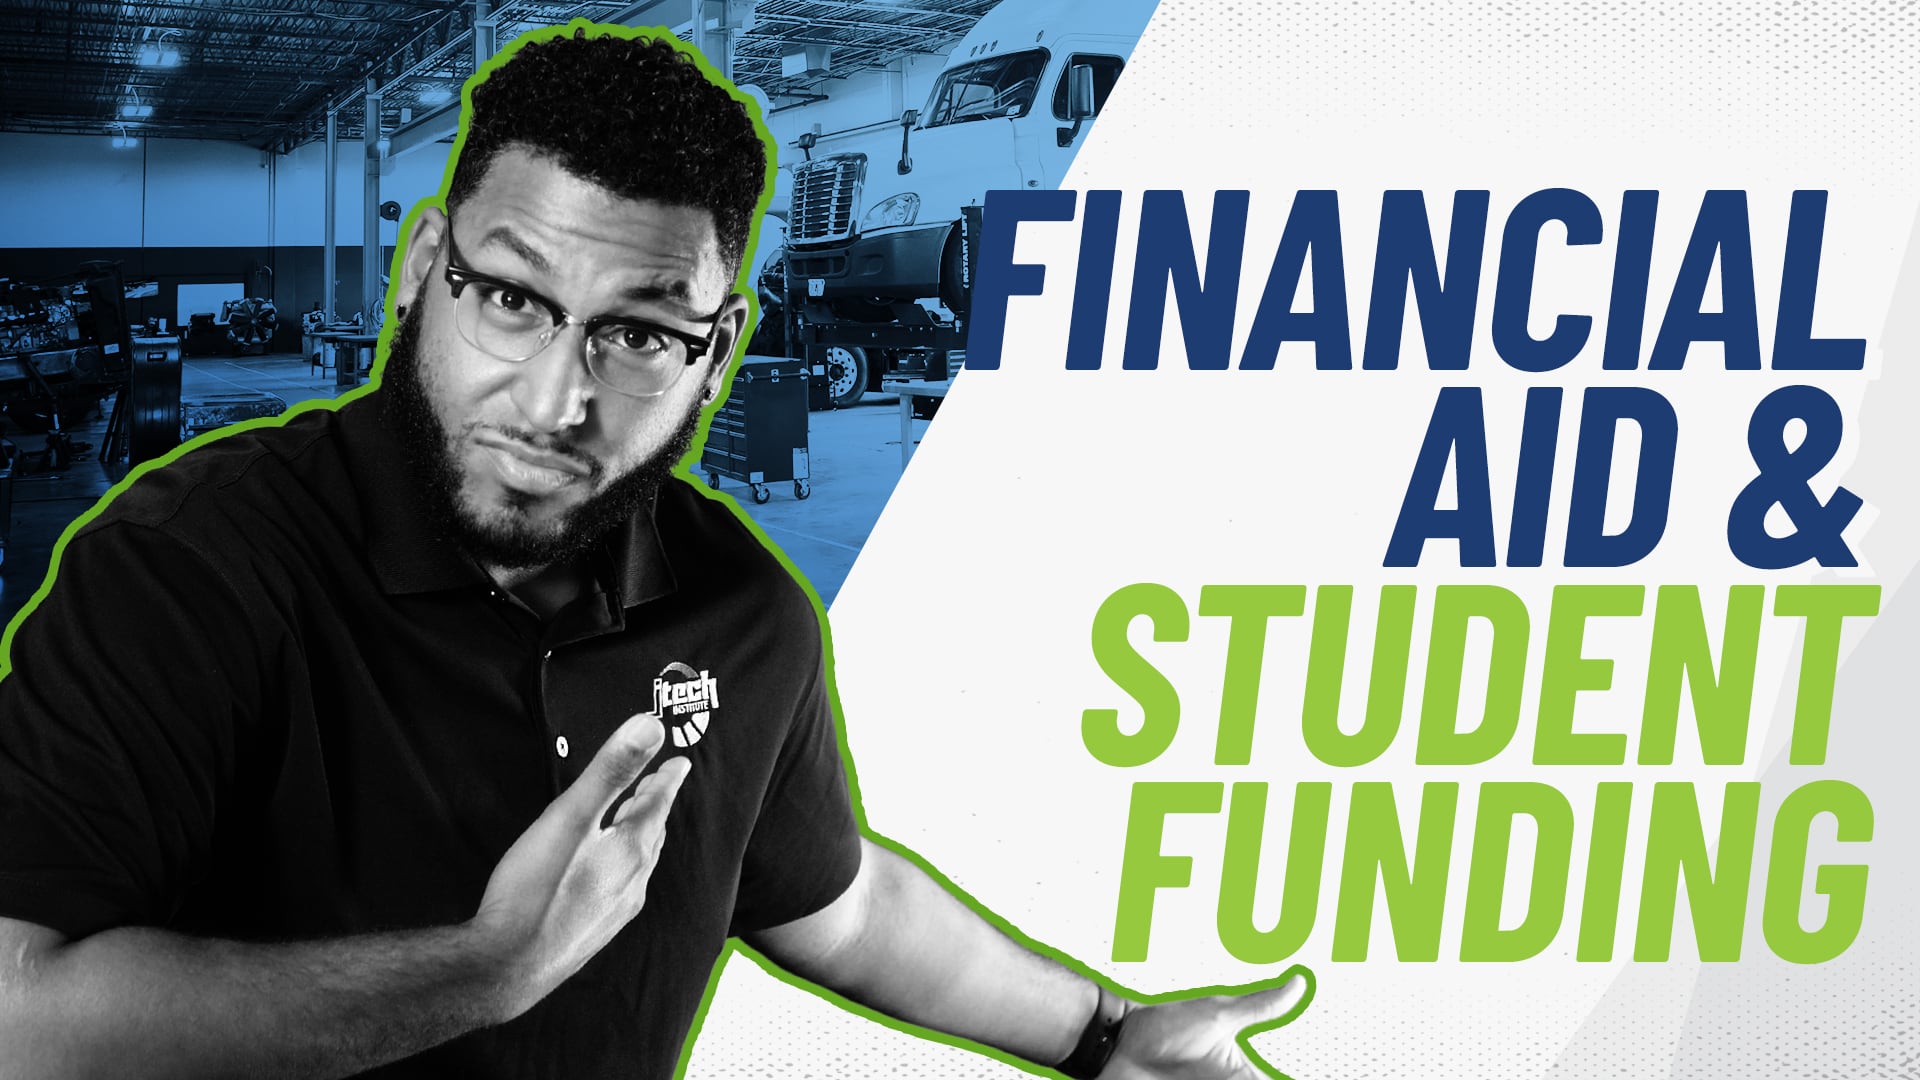 J-Tech Financial Aid & Student Funding video